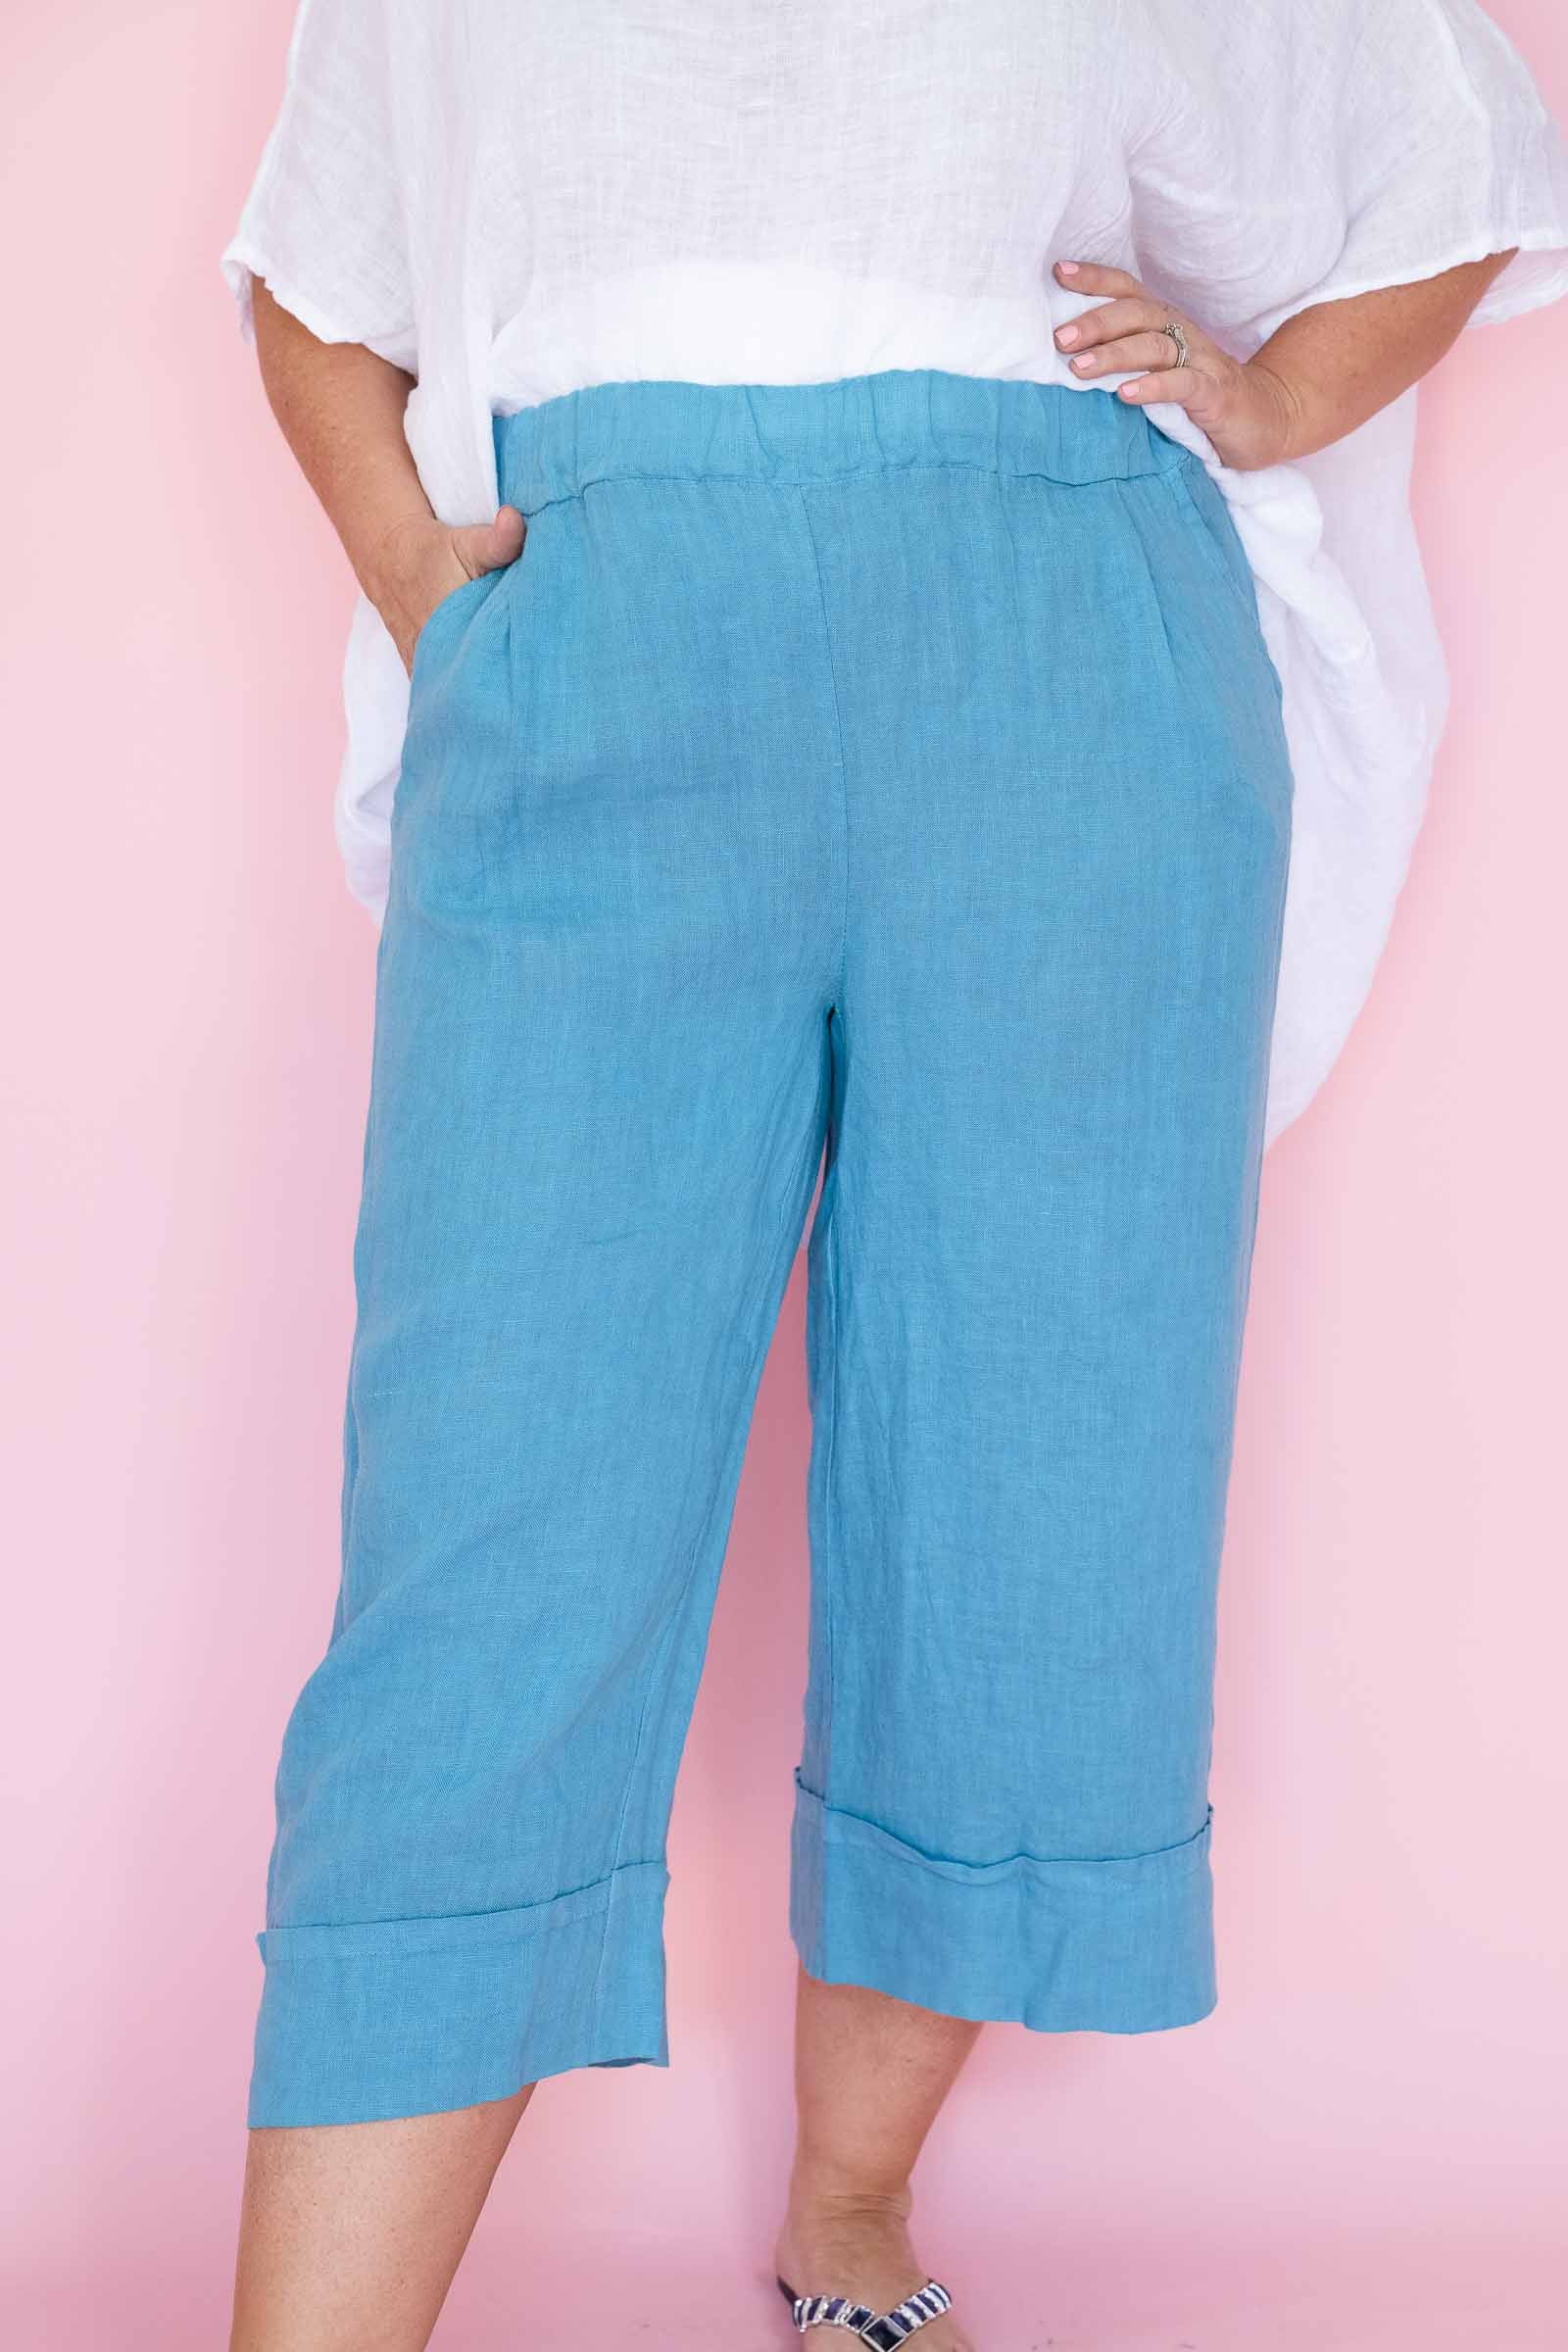 Ruffle Bottom Pant Crop Style, Linen – Heart's Desire Clothing